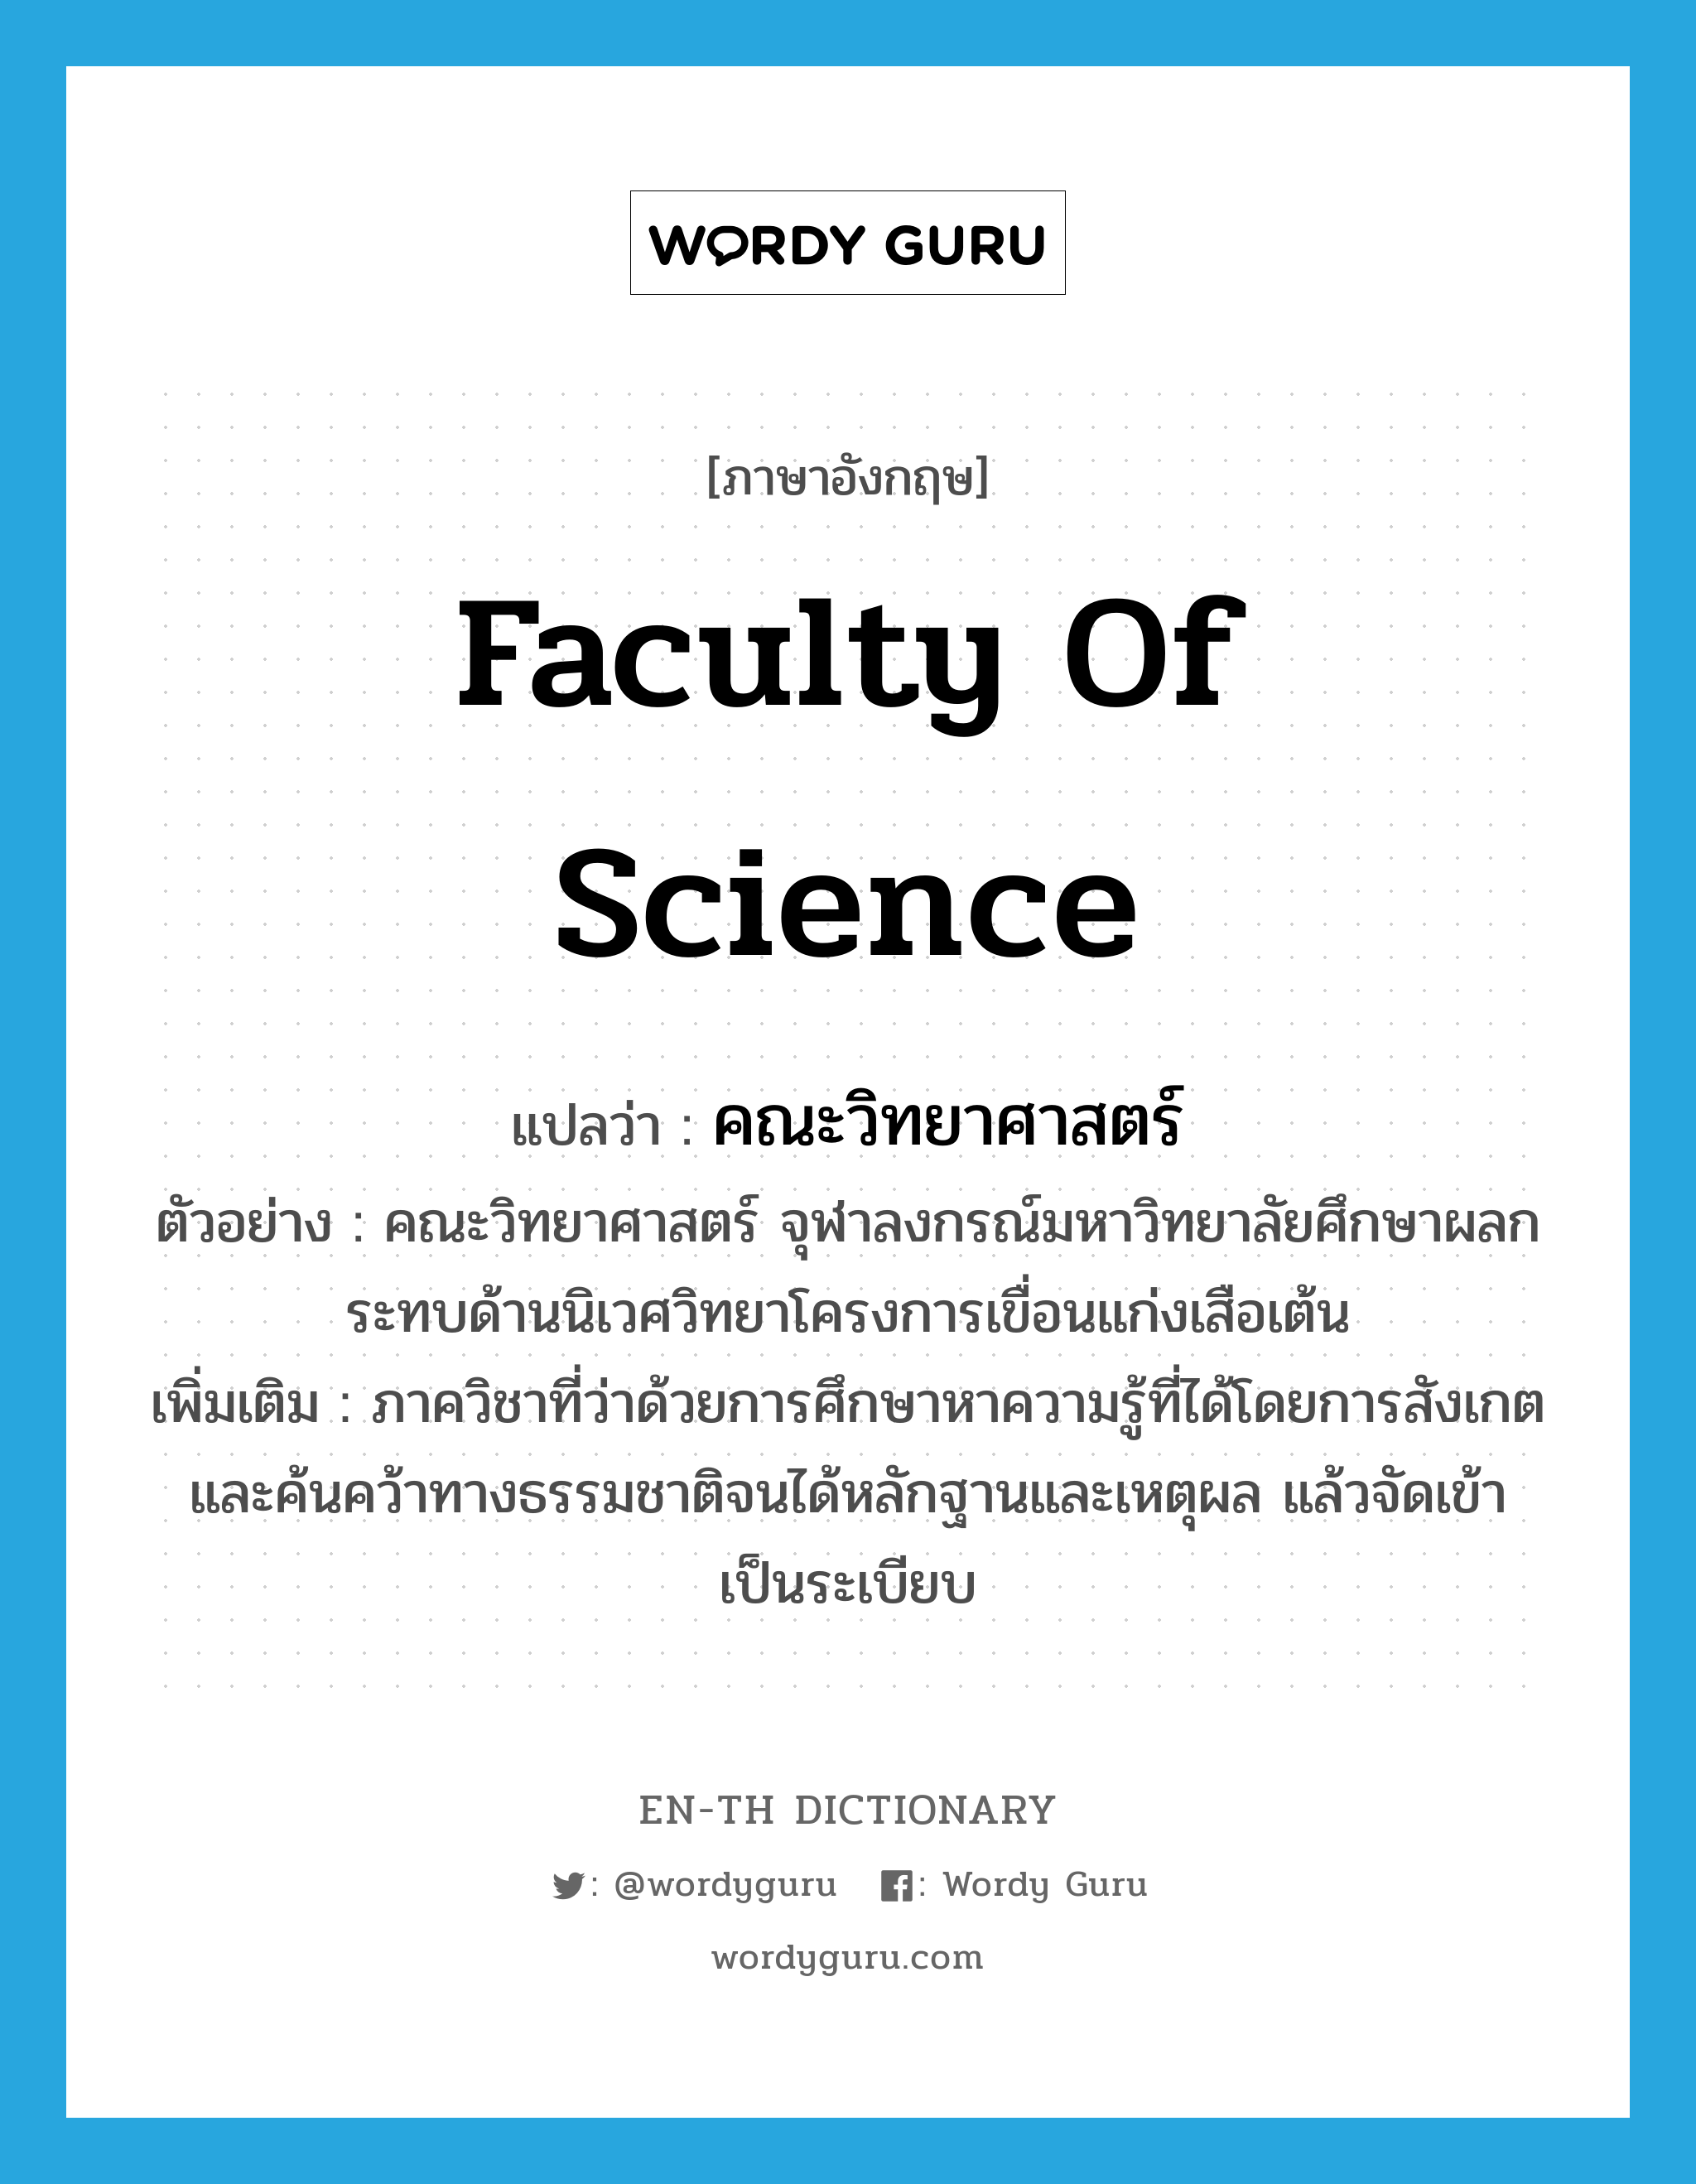 Faculty of Science แปลว่า?, คำศัพท์ภาษาอังกฤษ Faculty of Science แปลว่า คณะวิทยาศาสตร์ ประเภท N ตัวอย่าง คณะวิทยาศาสตร์ จุฬาลงกรณ์มหาวิทยาลัยศึกษาผลกระทบด้านนิเวศวิทยาโครงการเขื่อนแก่งเสือเต้น เพิ่มเติม ภาควิชาที่ว่าด้วยการศึกษาหาความรู้ที่ได้โดยการสังเกตและค้นคว้าทางธรรมชาติจนได้หลักฐานและเหตุผล แล้วจัดเข้าเป็นระเบียบ หมวด N